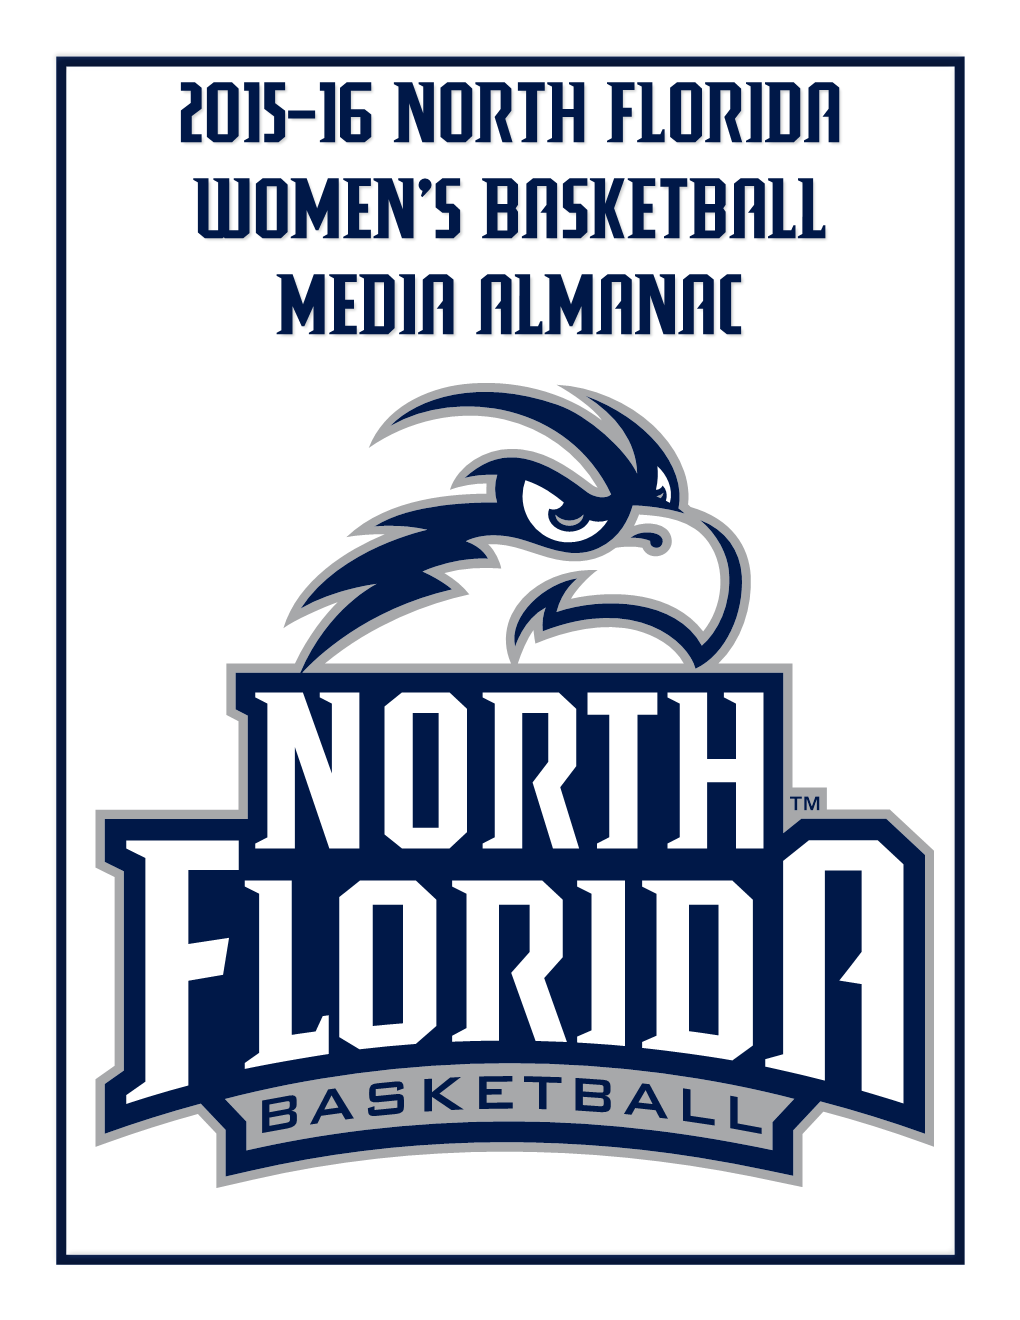 2015-16 North Florida Women's Basketball Media Almanac